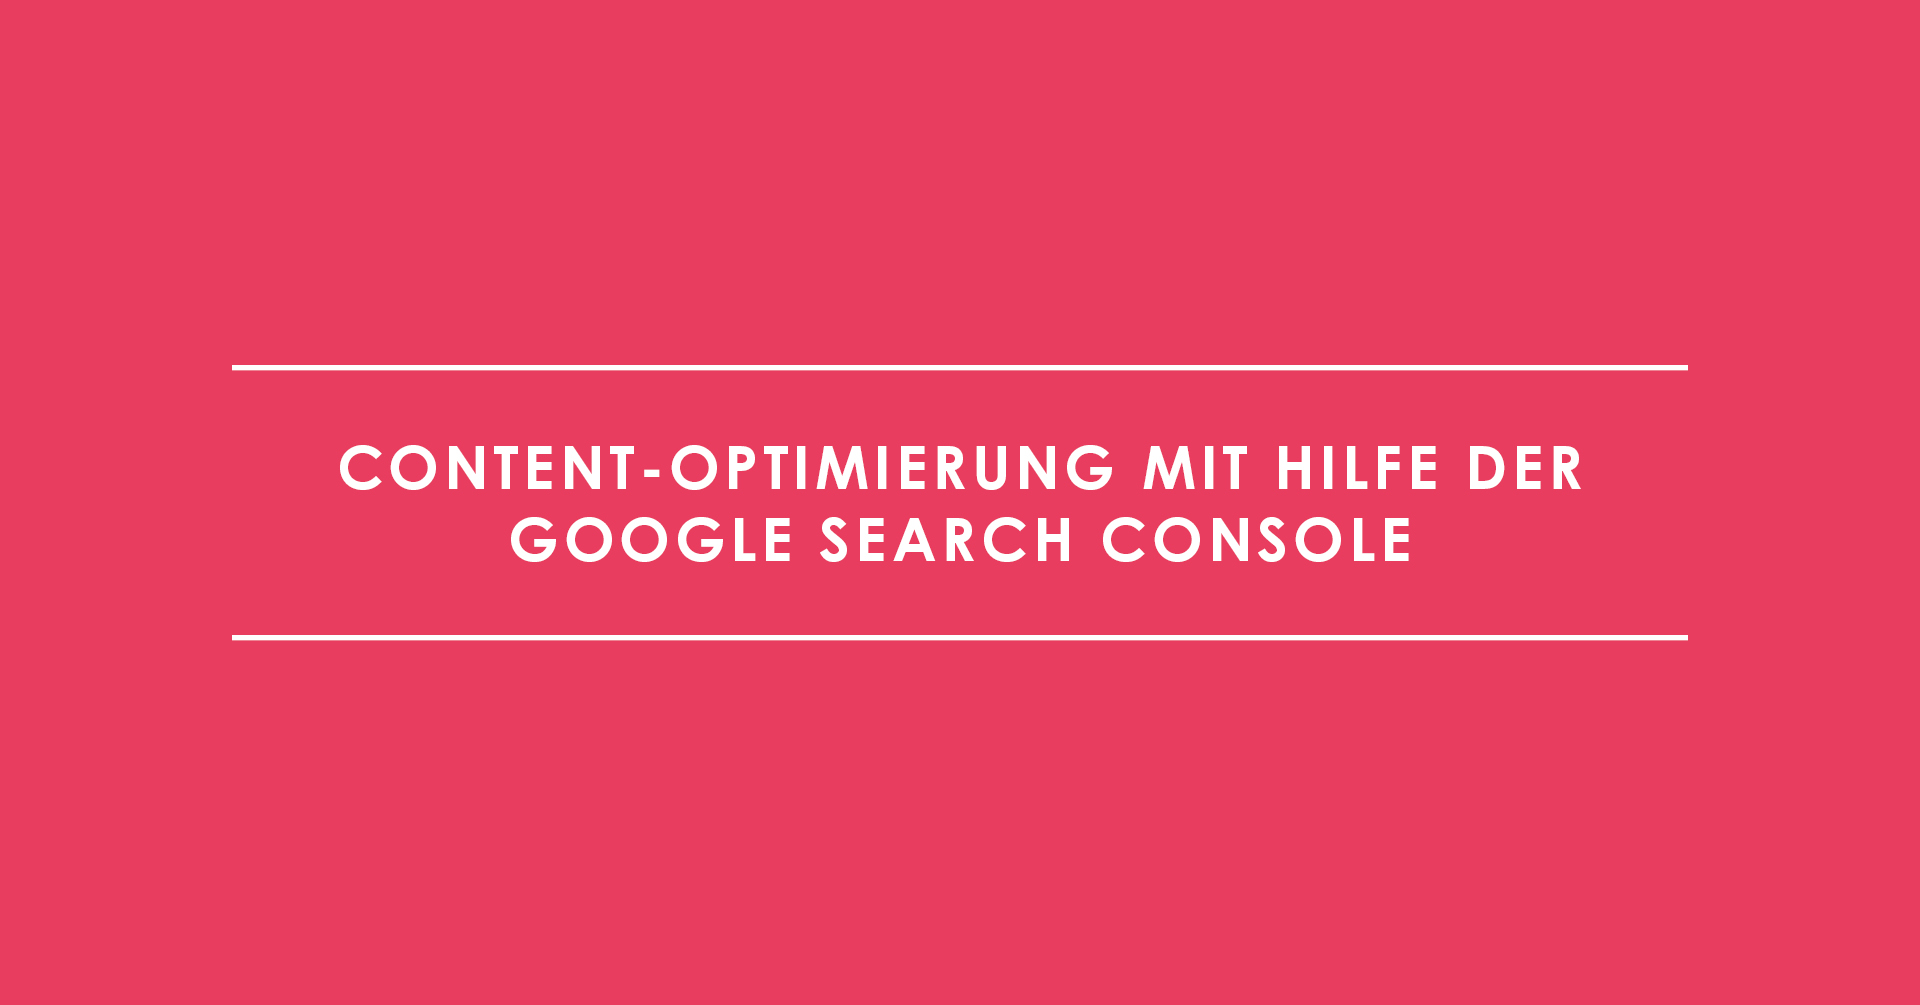 Content-Optimierung mit Hilfe der Google Search Console